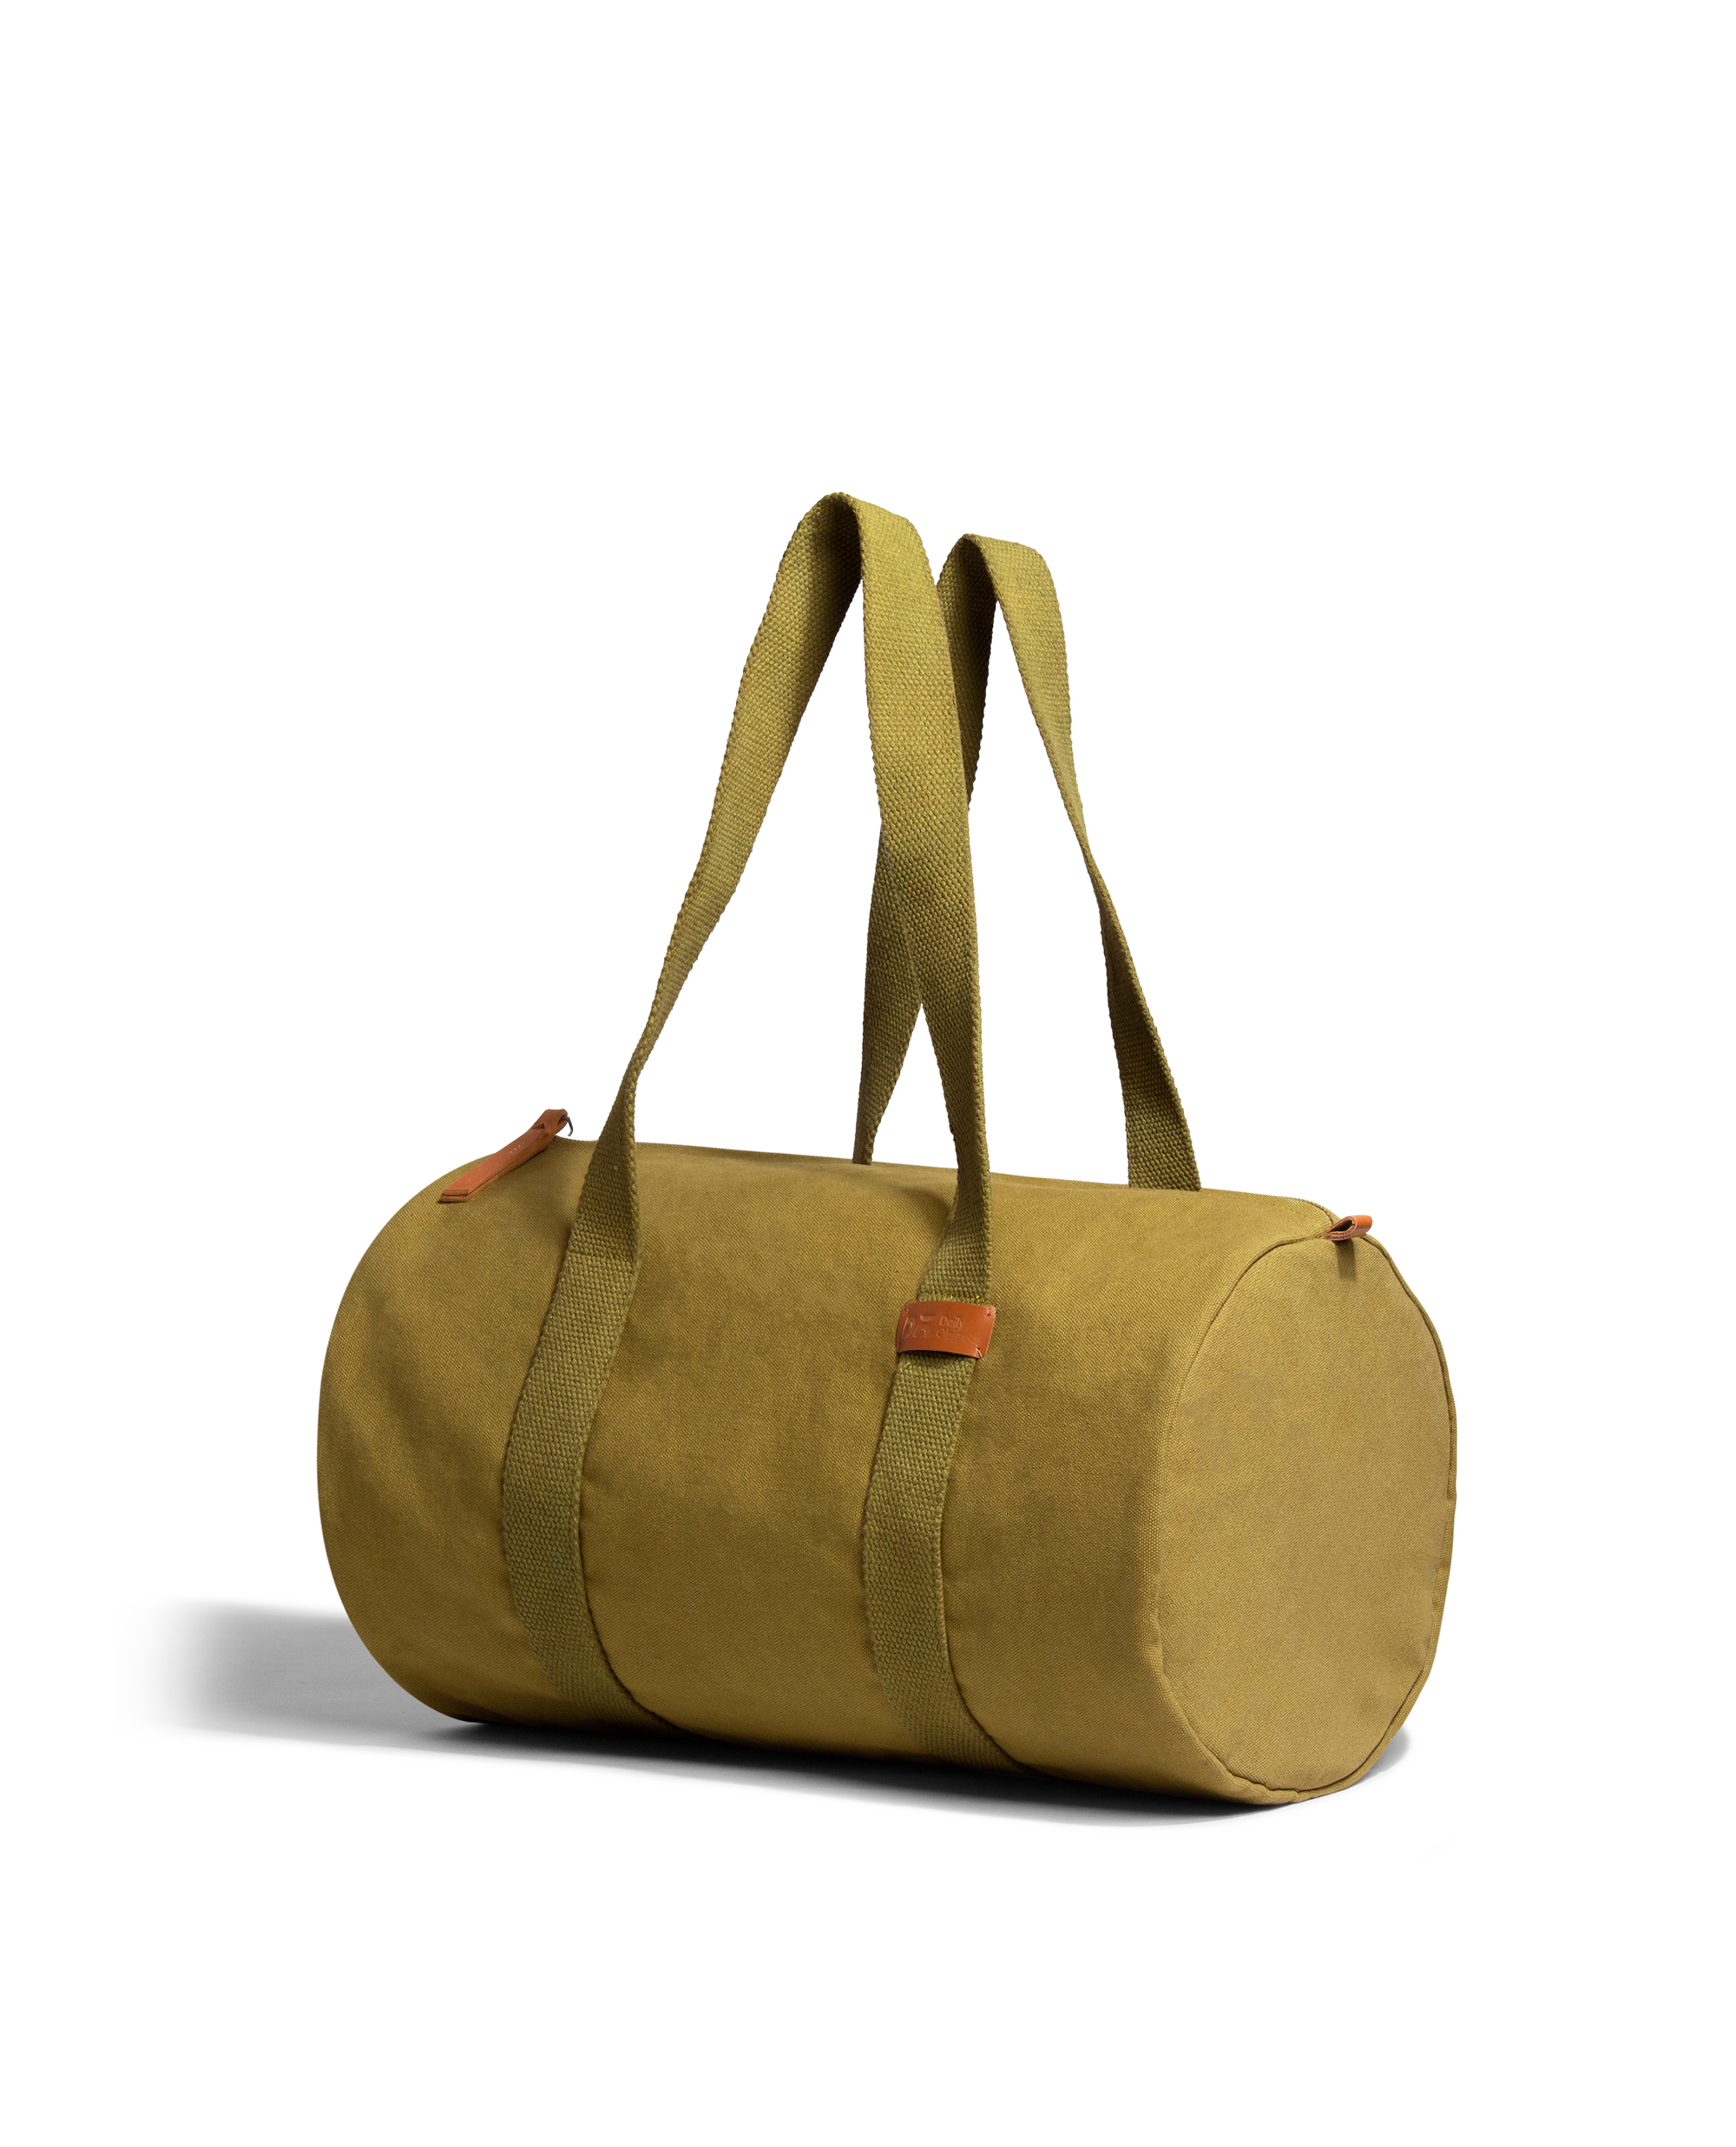 Buy Purple Travel Bags for Men by AXEN BAGS Online  Ajiocom